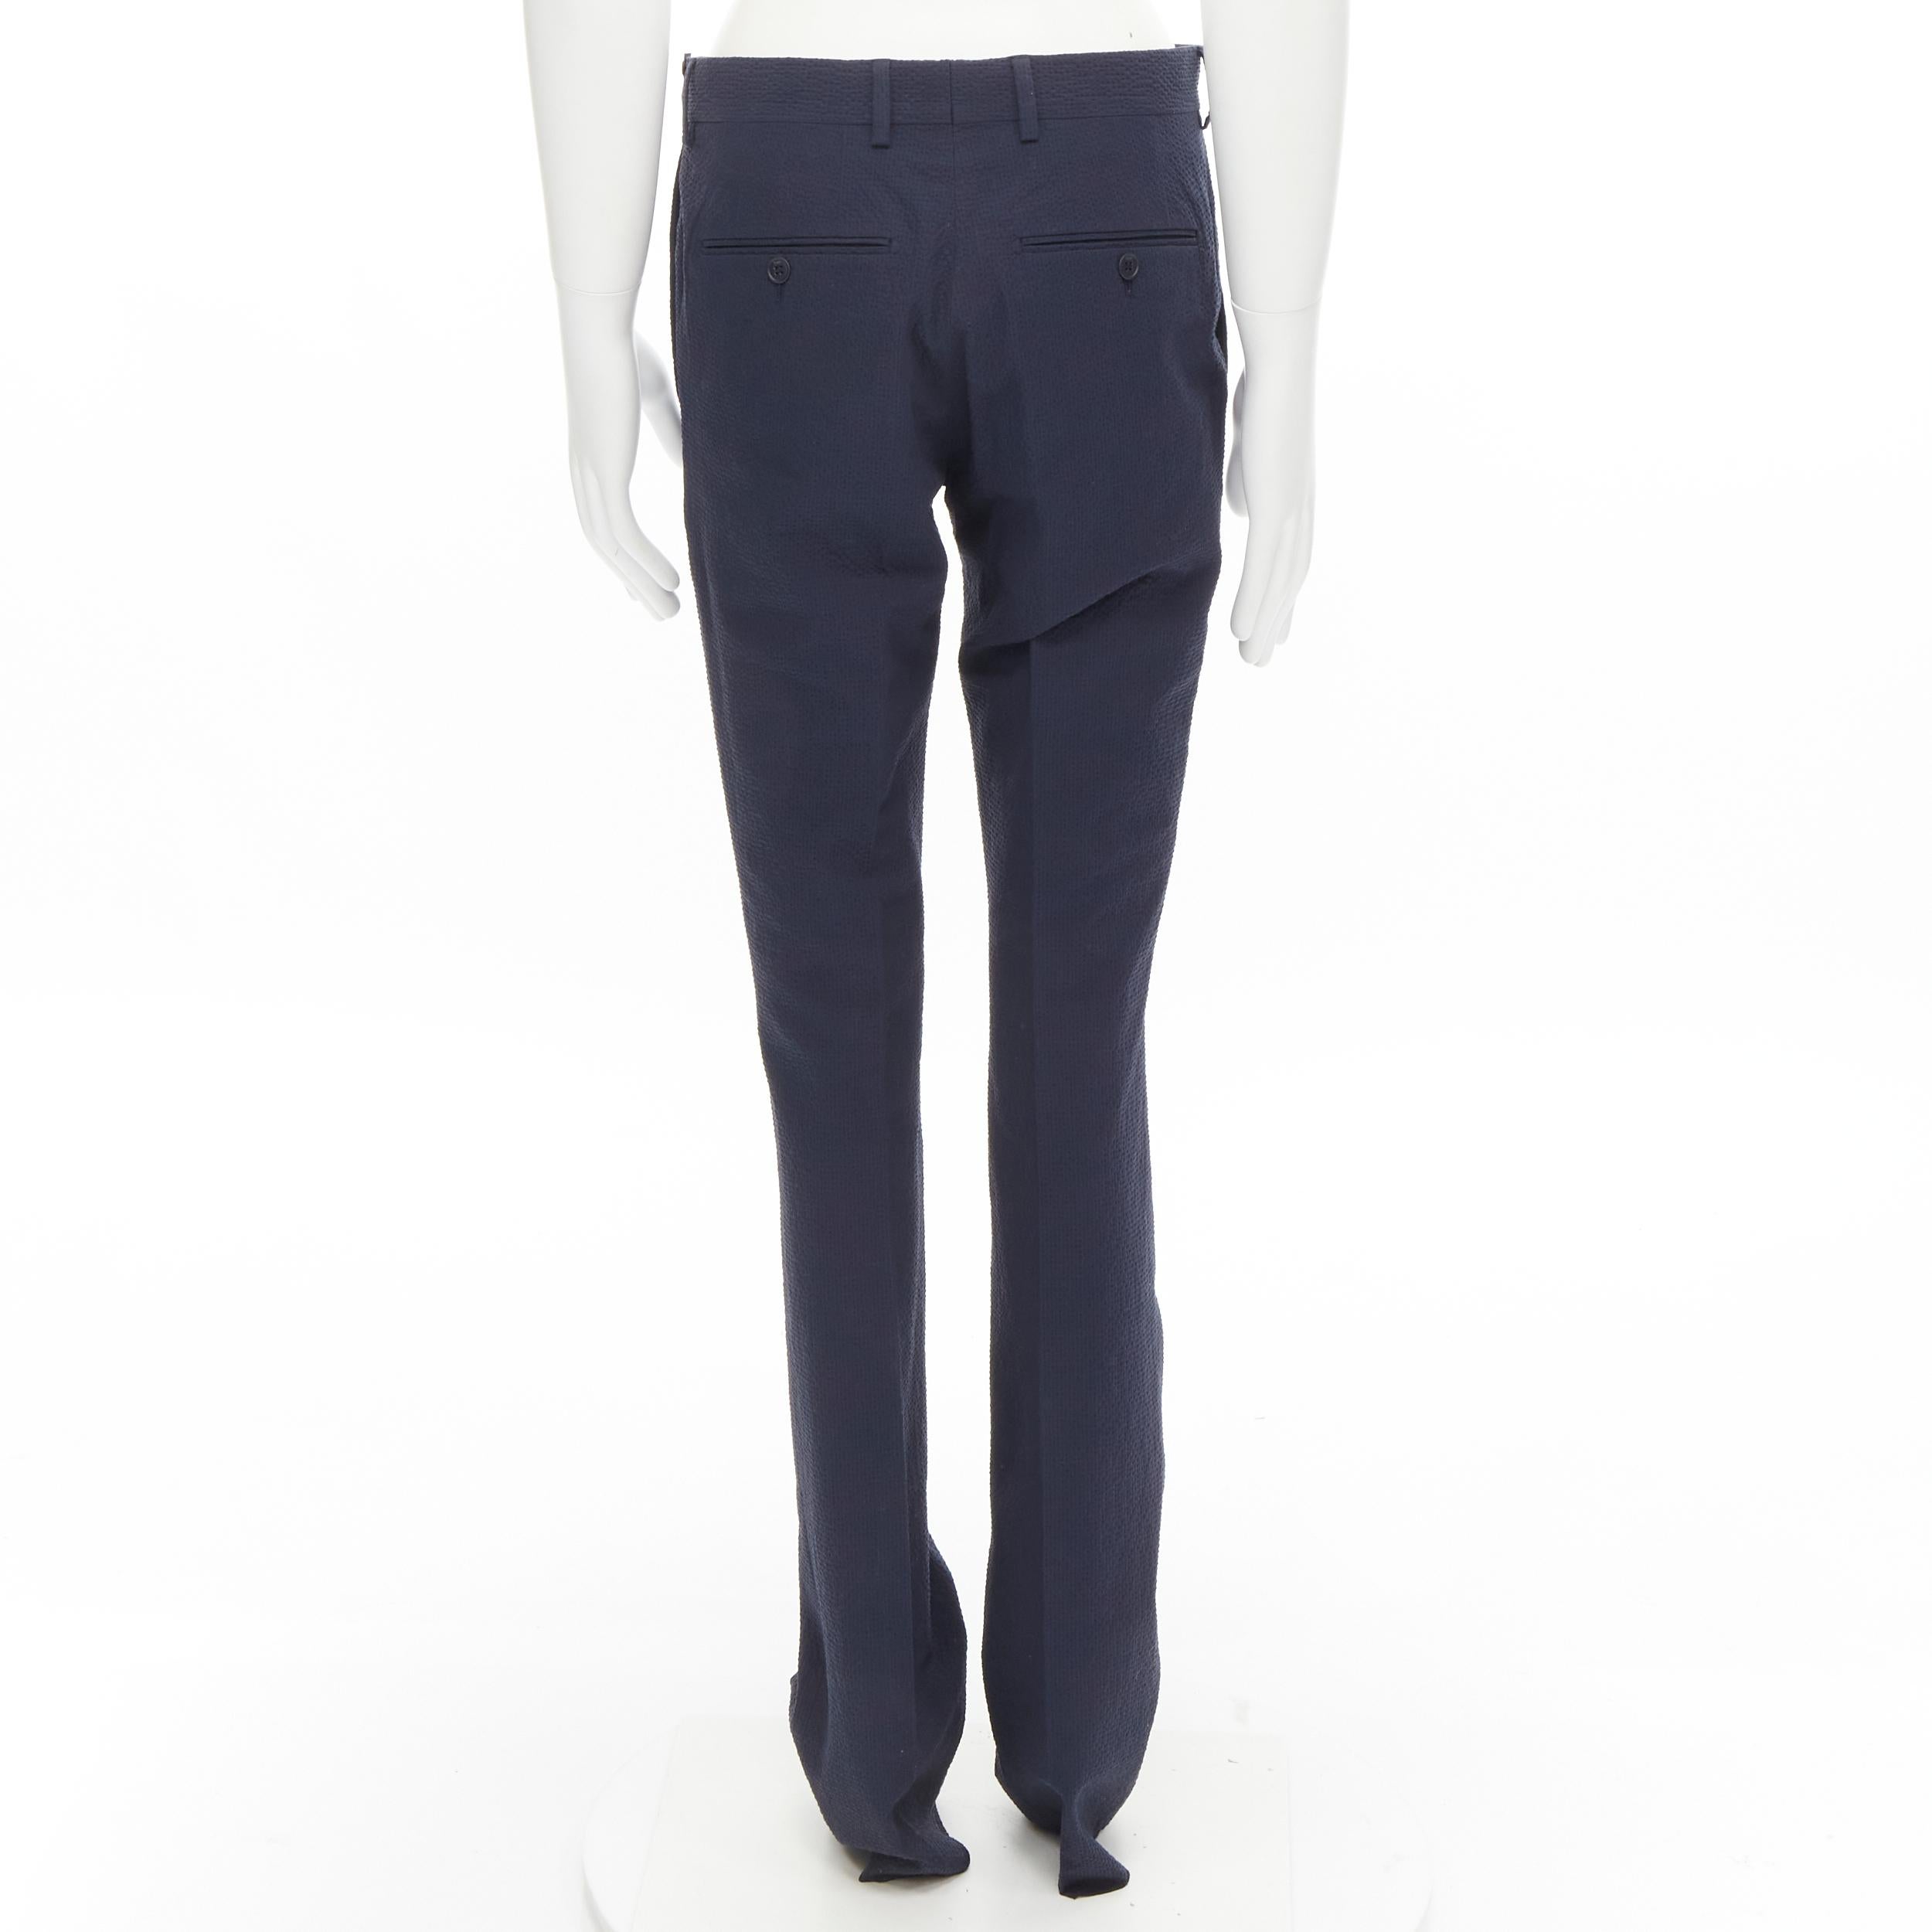 Black FENDI navy blue seersucker cotton blend trousers pants IT44 XS